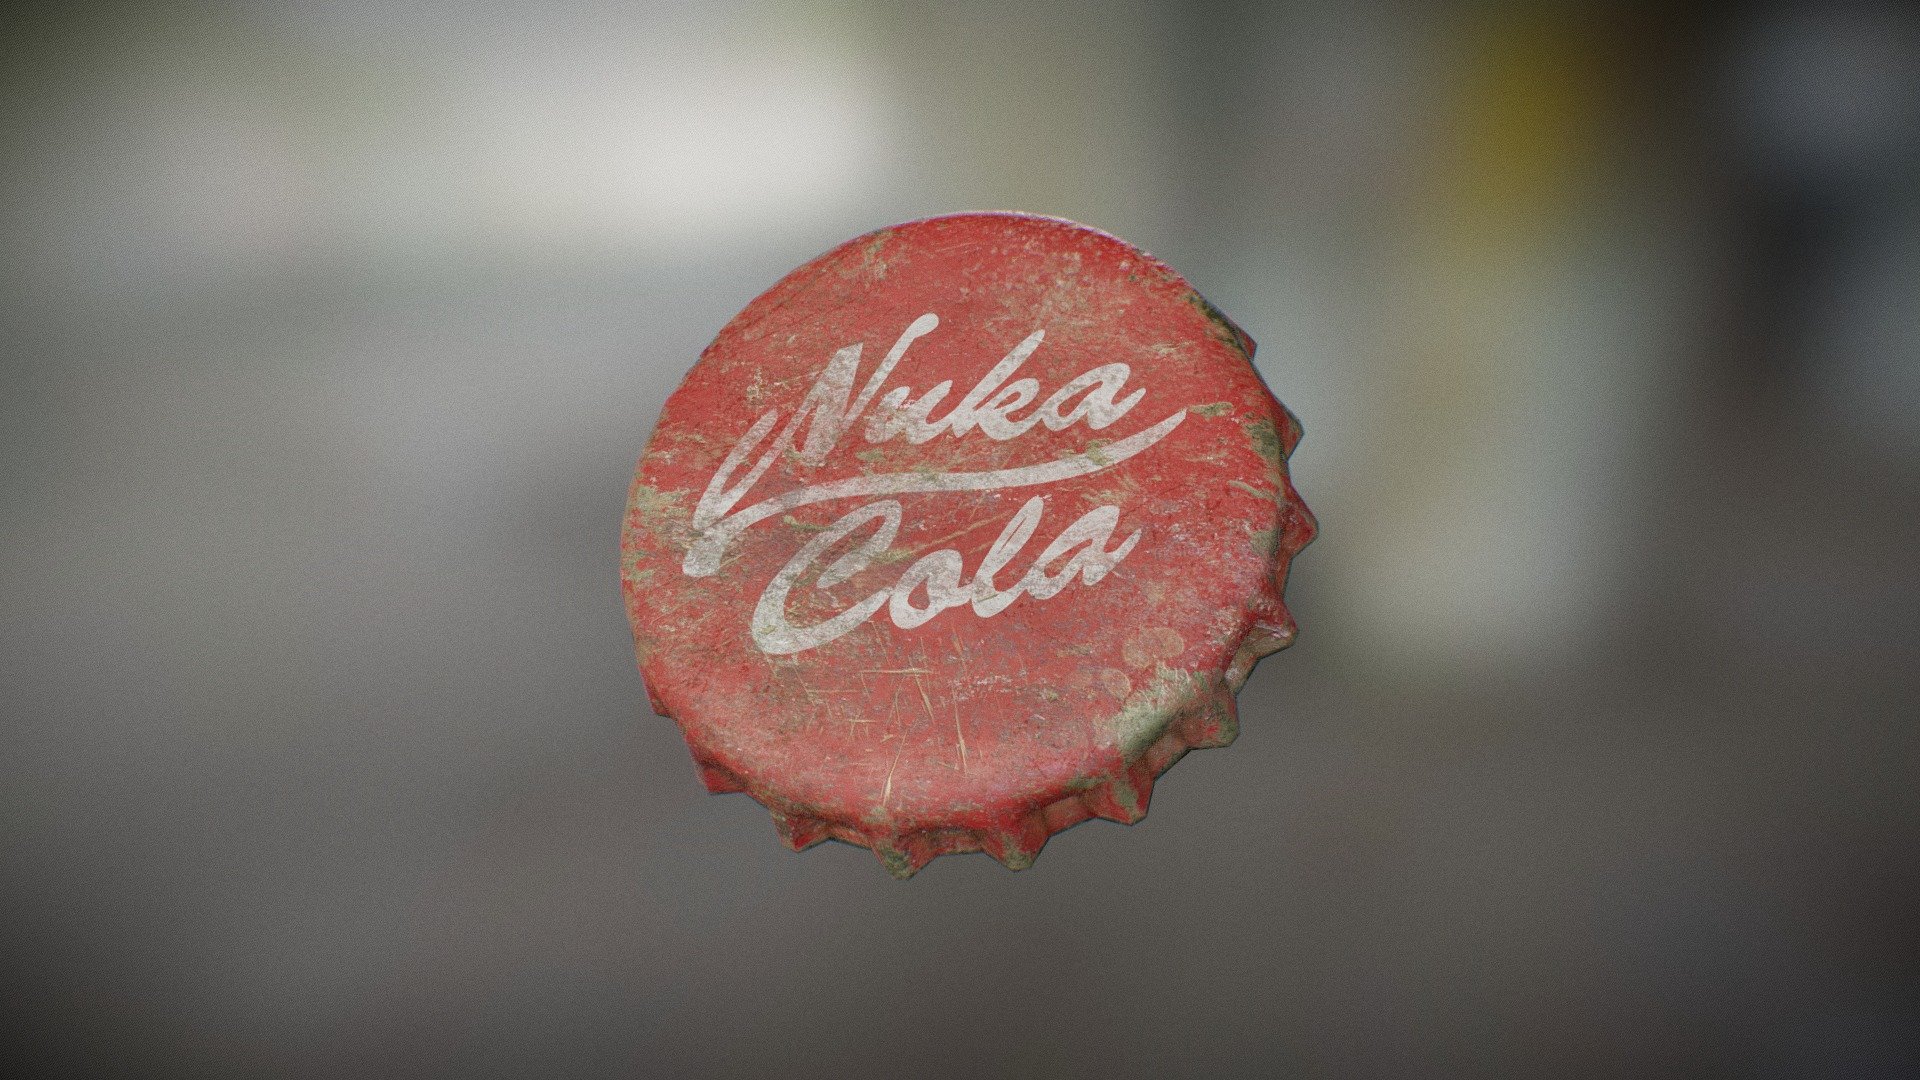 nuka-cola-bottle-cap-download-free-3d-model-by-yogensia-5c4f018